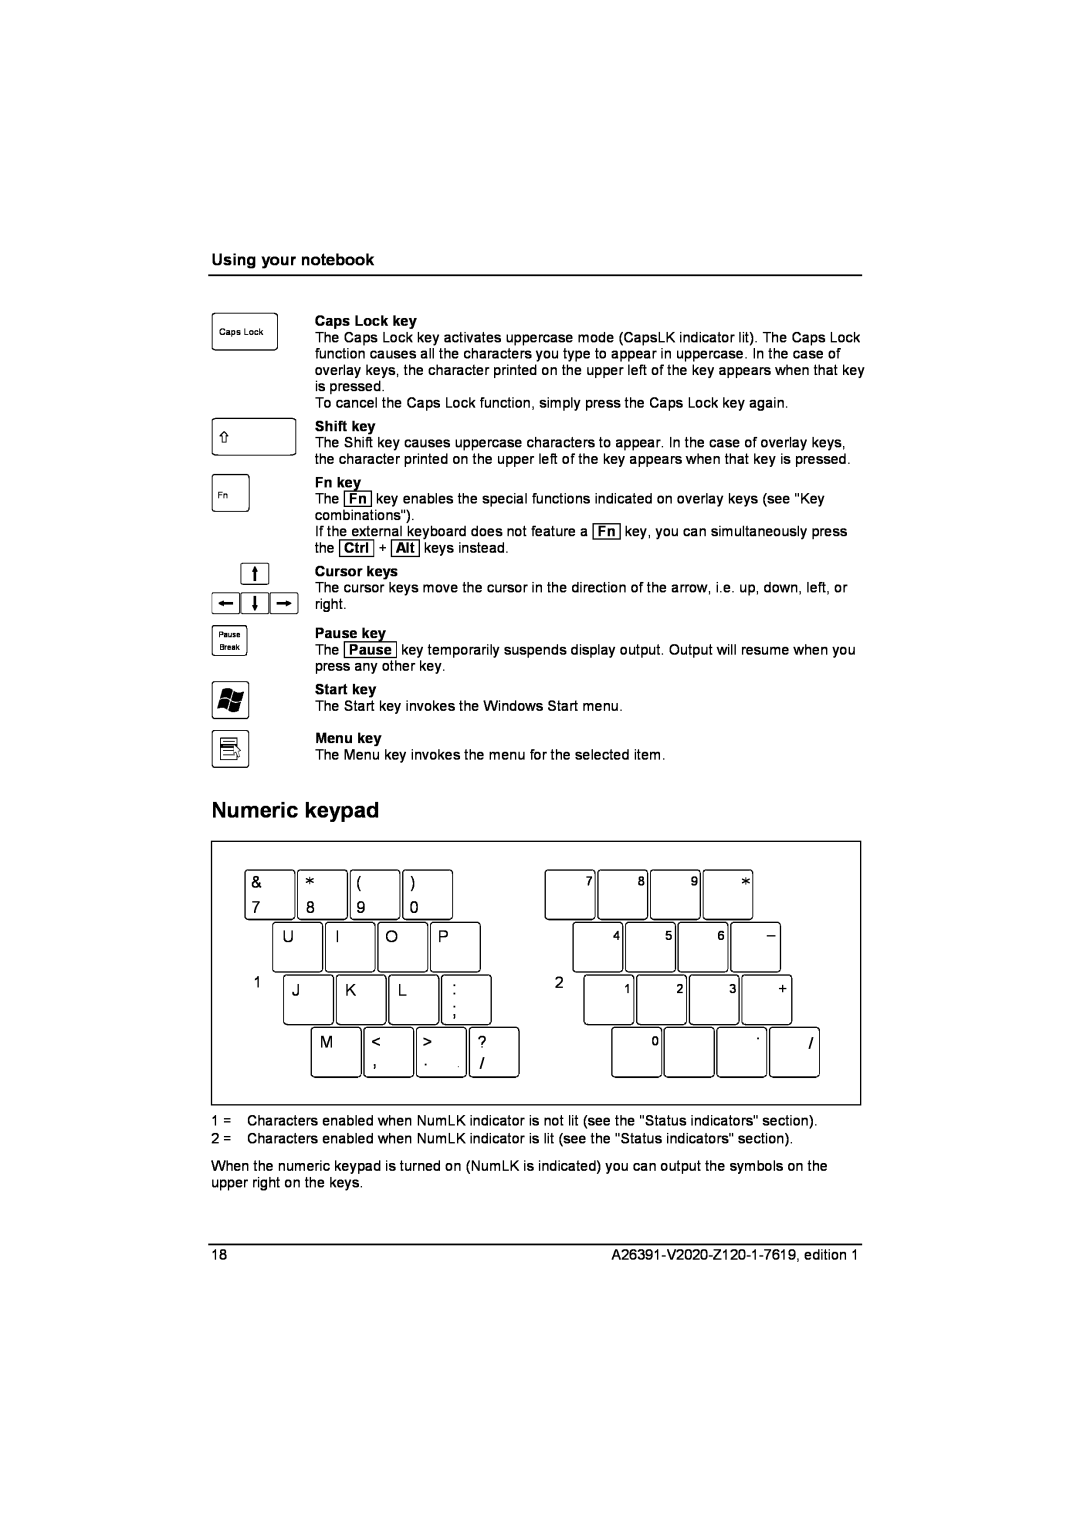 Fujitsu Siemens Computers V2020 manual Numeric keypad, Using your notebook 